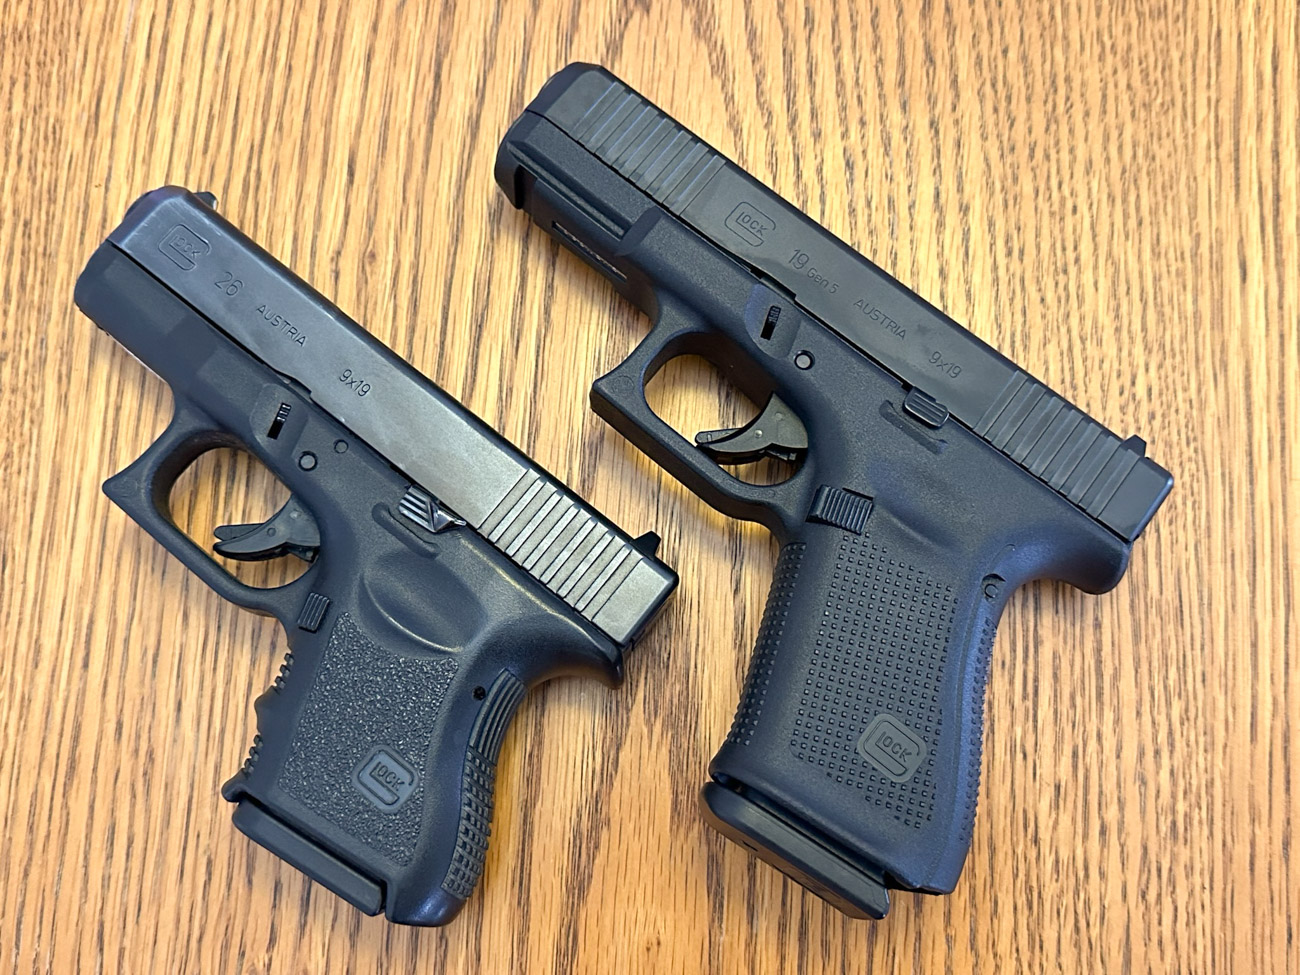 Glock G19 vs Glock G26 size comparison